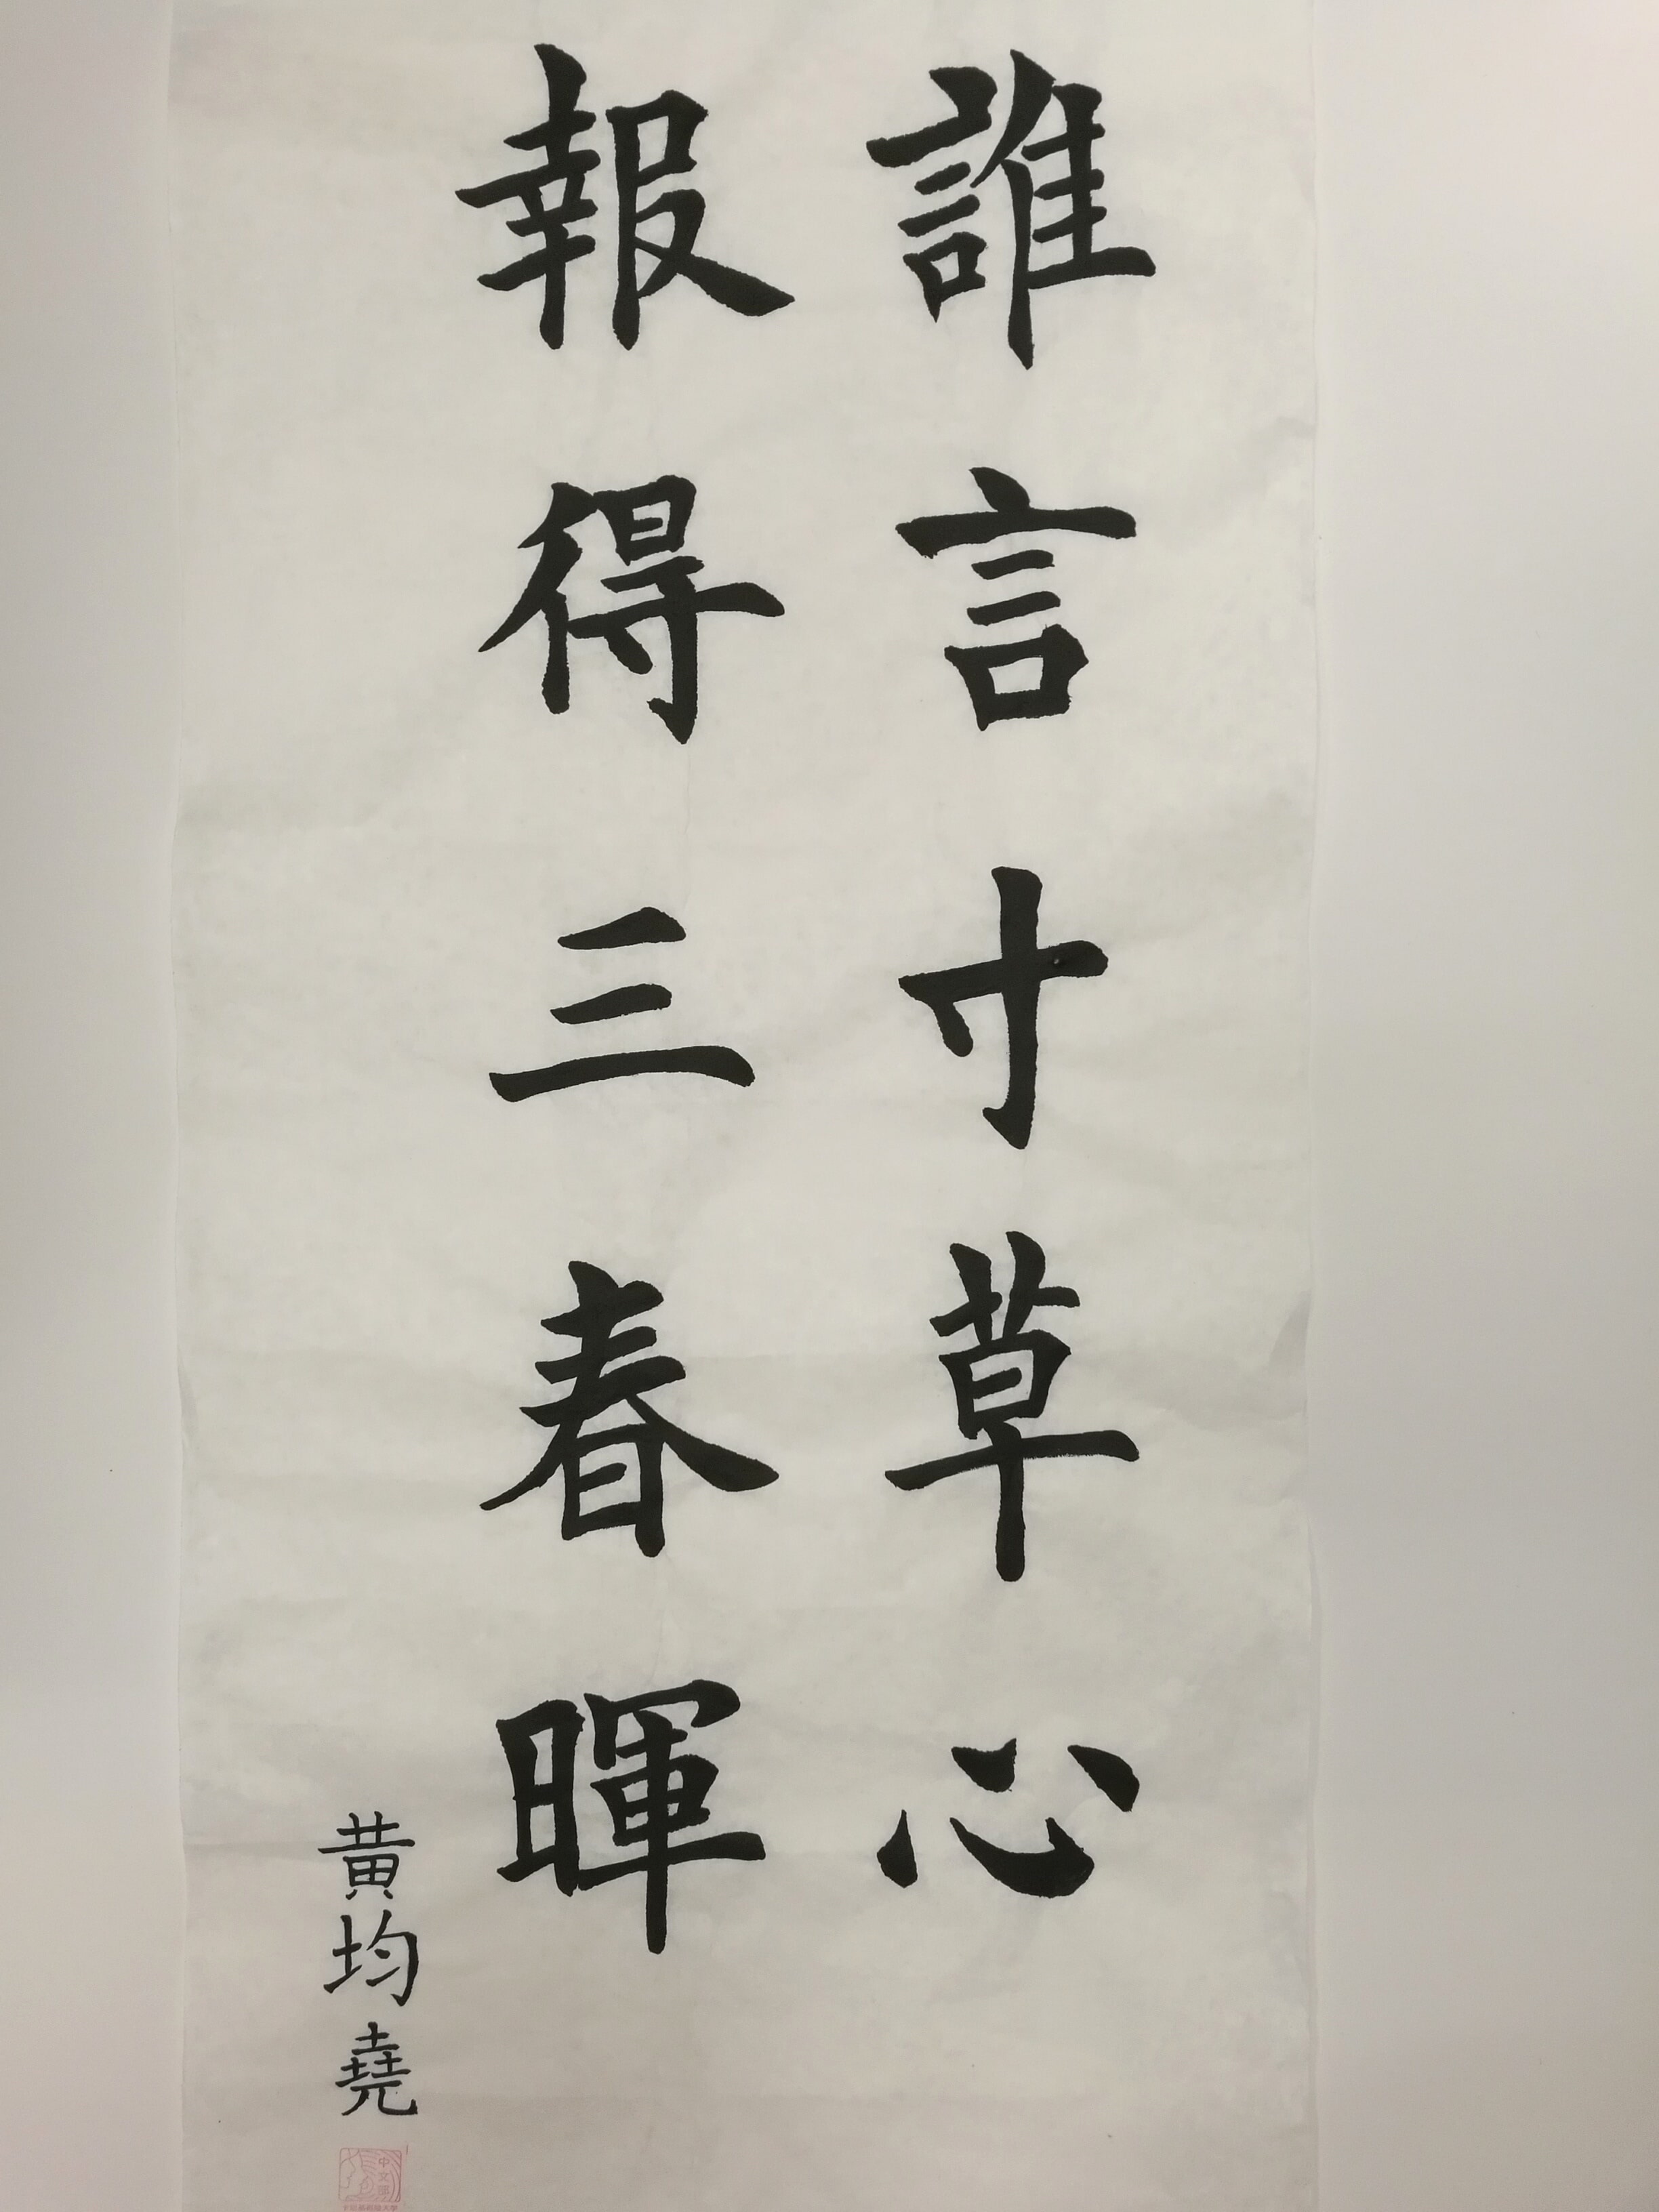 wong-calligraphy-min.jpg